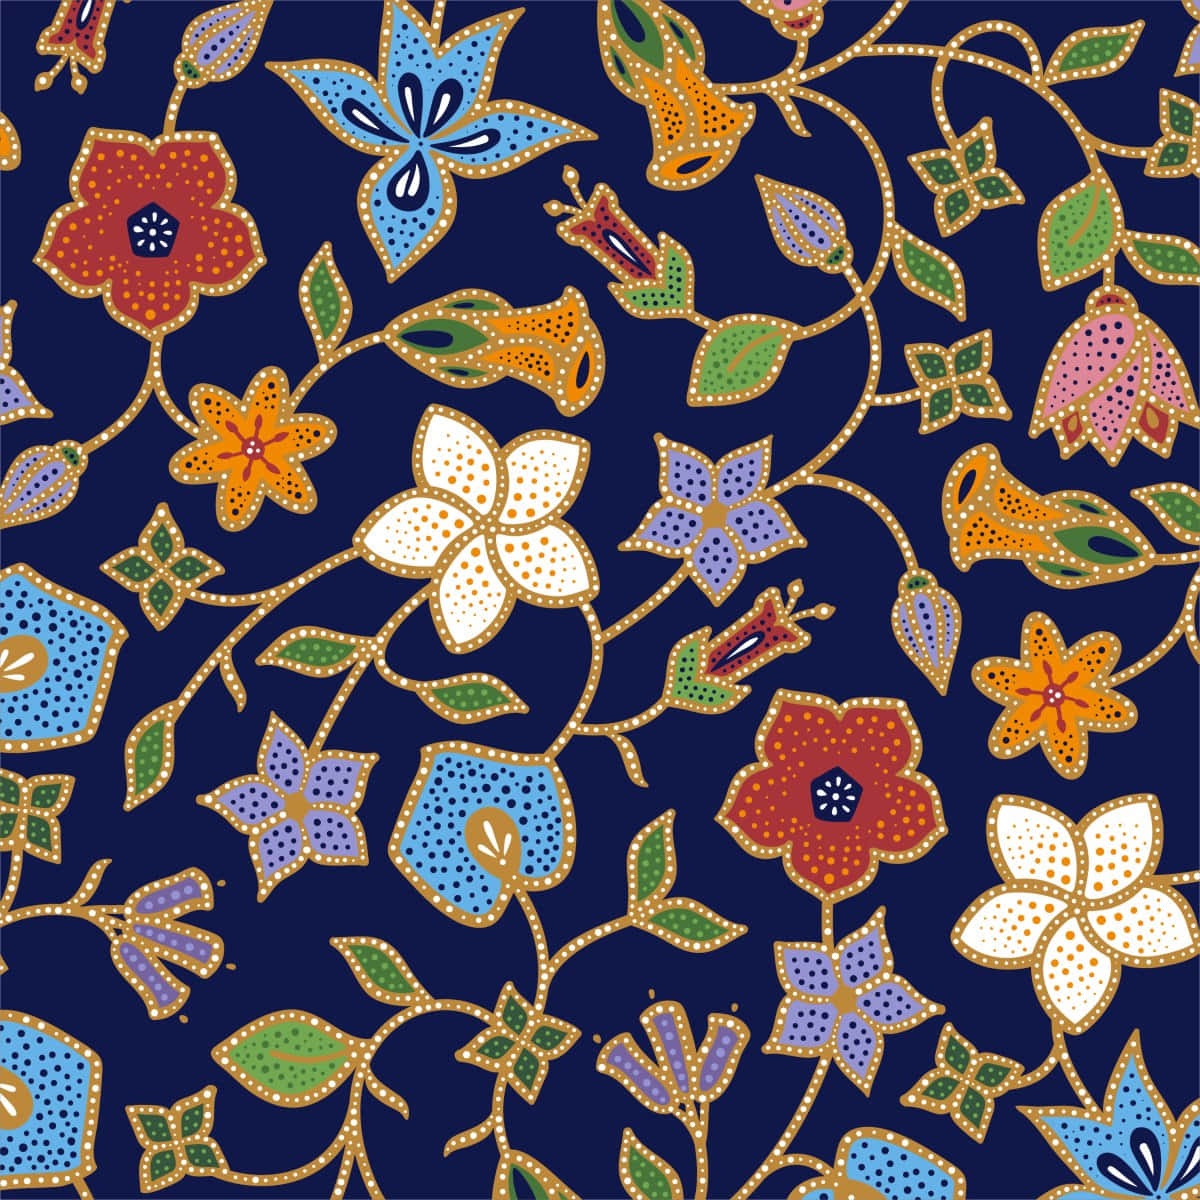 Caption: Intricate Batik Pattern Background